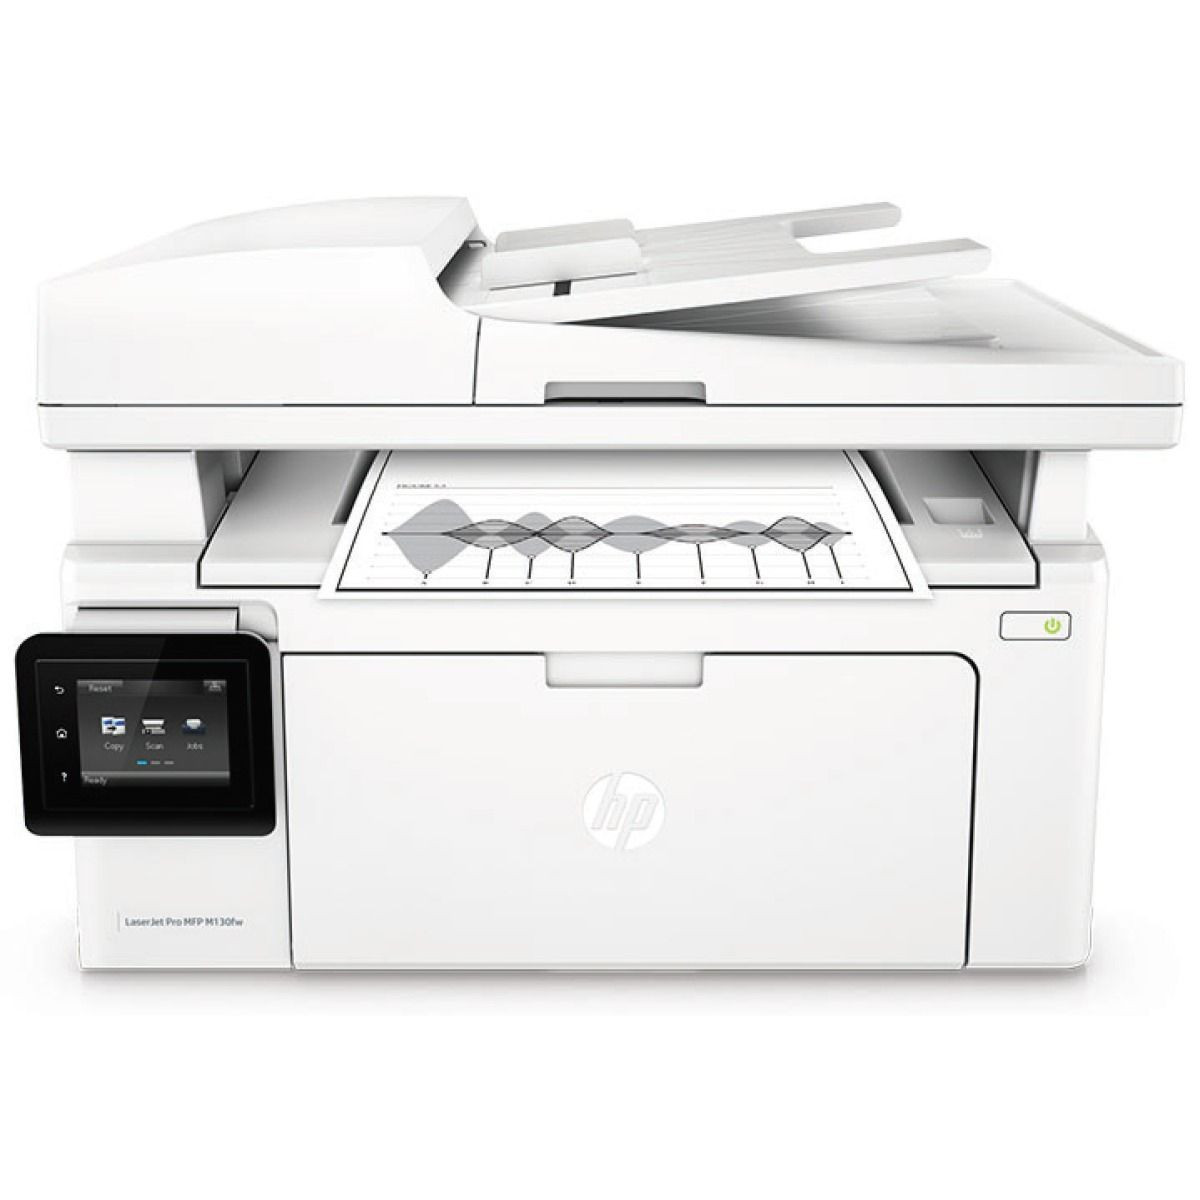 Multifunctionala HP LaserJet Pro MFP M130fw Printer Monocrom G3Q60A, A4, Wireless, Retea